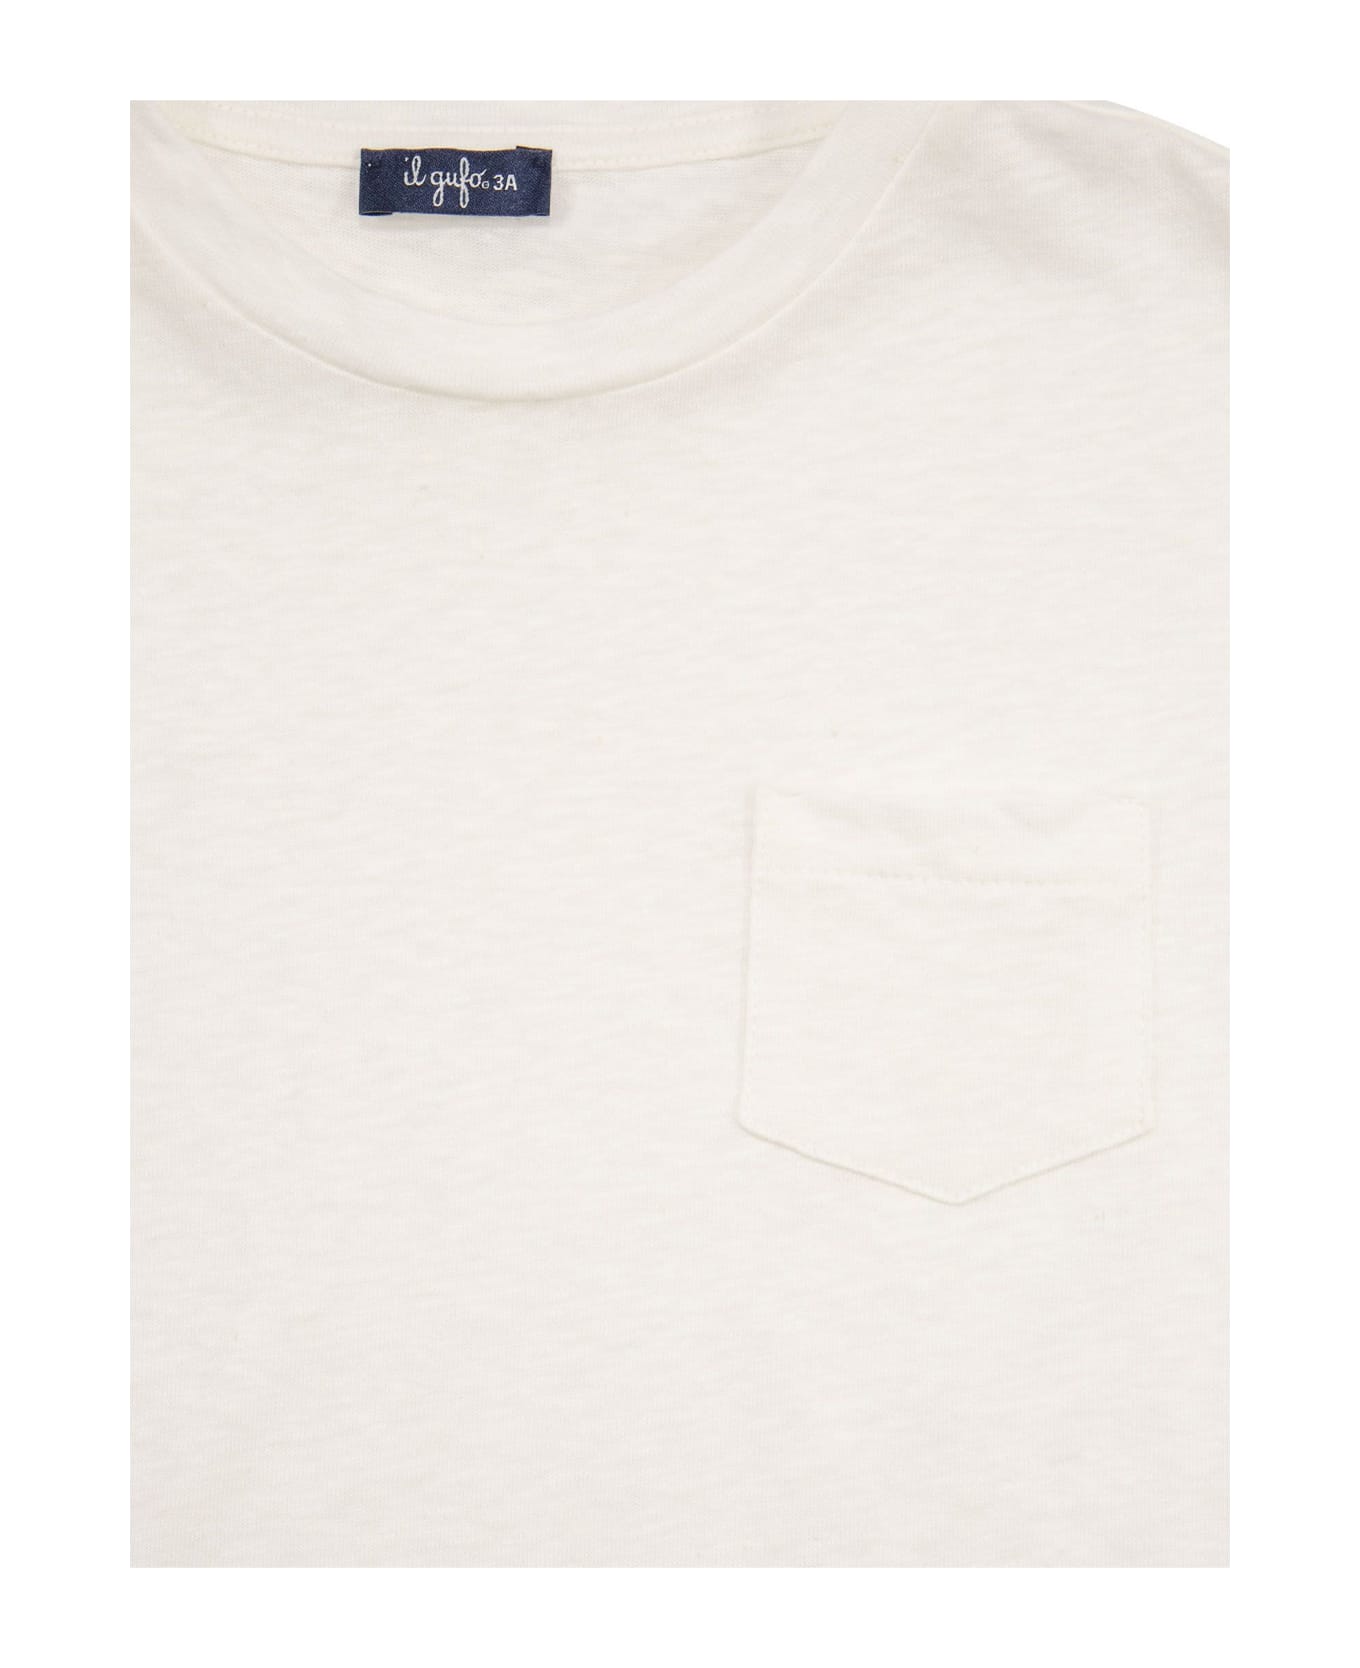 Il Gufo White Cotton And Linen T-shirt - Milk